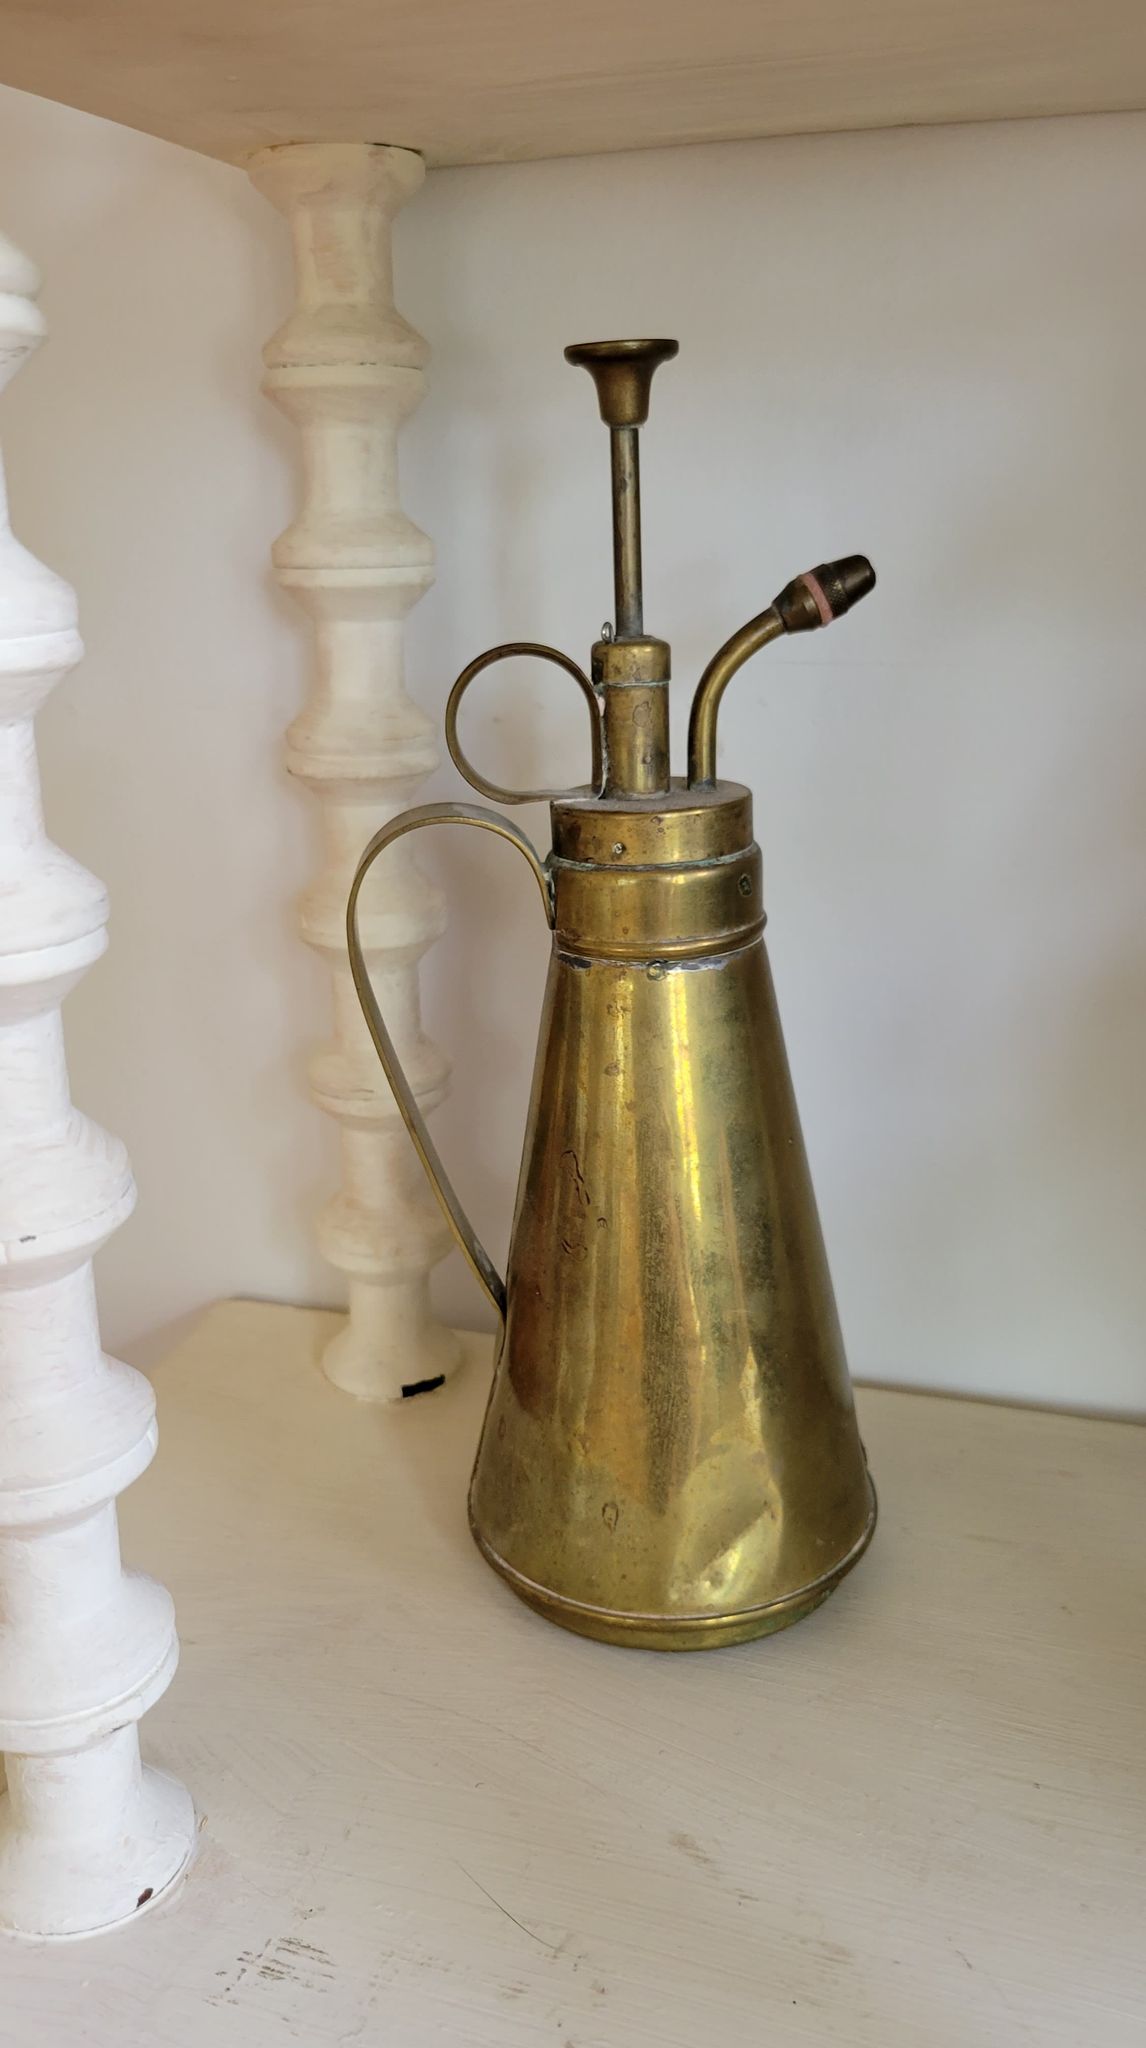 Tall Brass Atomizer/Spritzing Bottle (Non Functional)